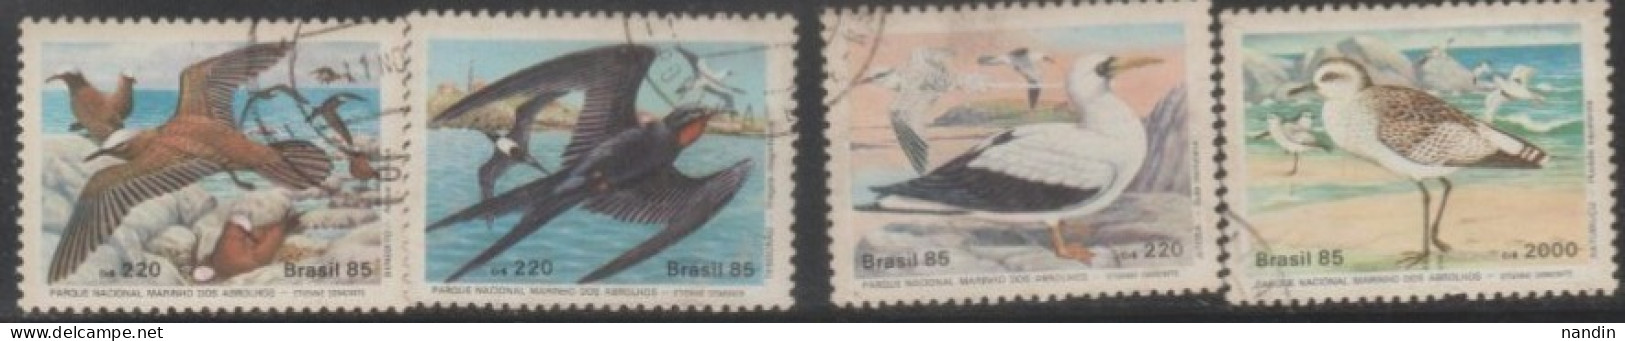 1985 BRAZIL USED STAMPS ON BIRD/ BIRDS FOUND IN NATIONAL MARINE PARK,ABROLHOS - Albatros